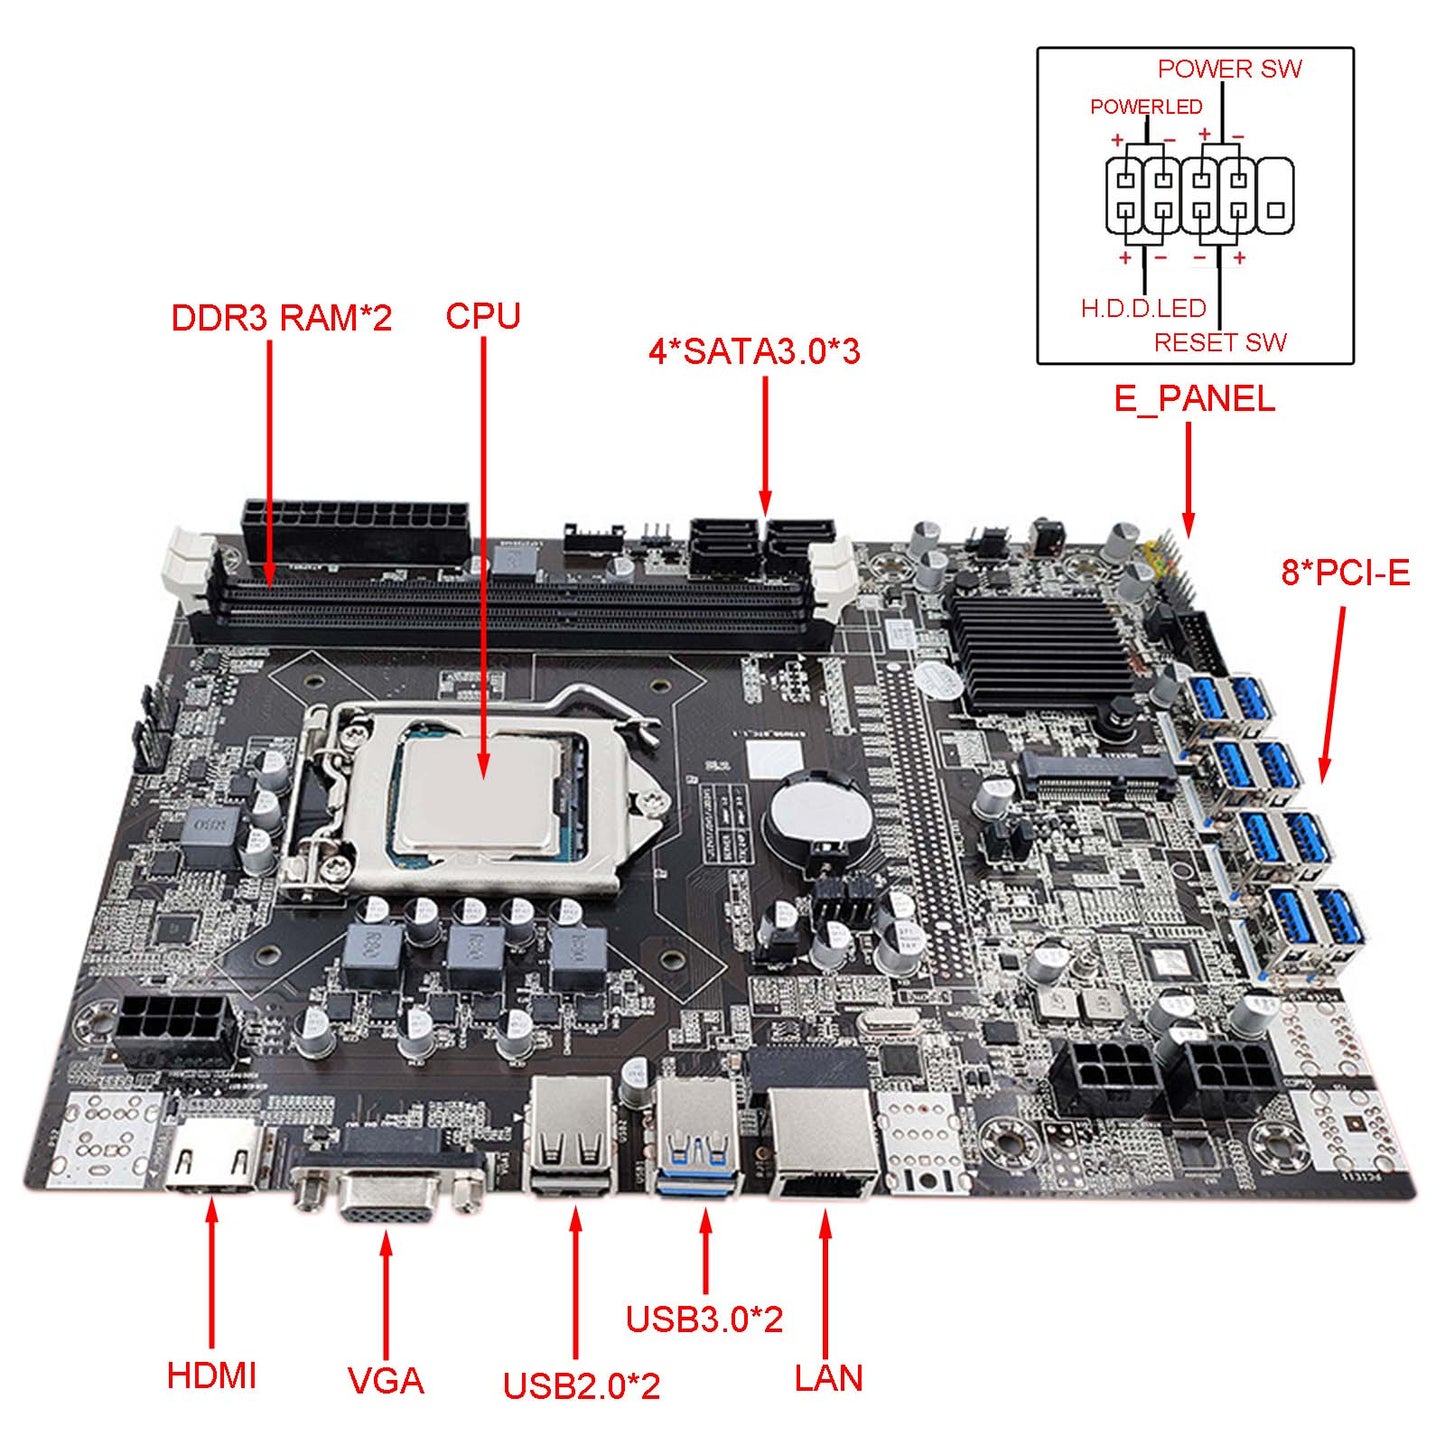 B250C-BTC PCI Express DDR4 Computer Mining Motherboard for LGA1151 Gen6/7